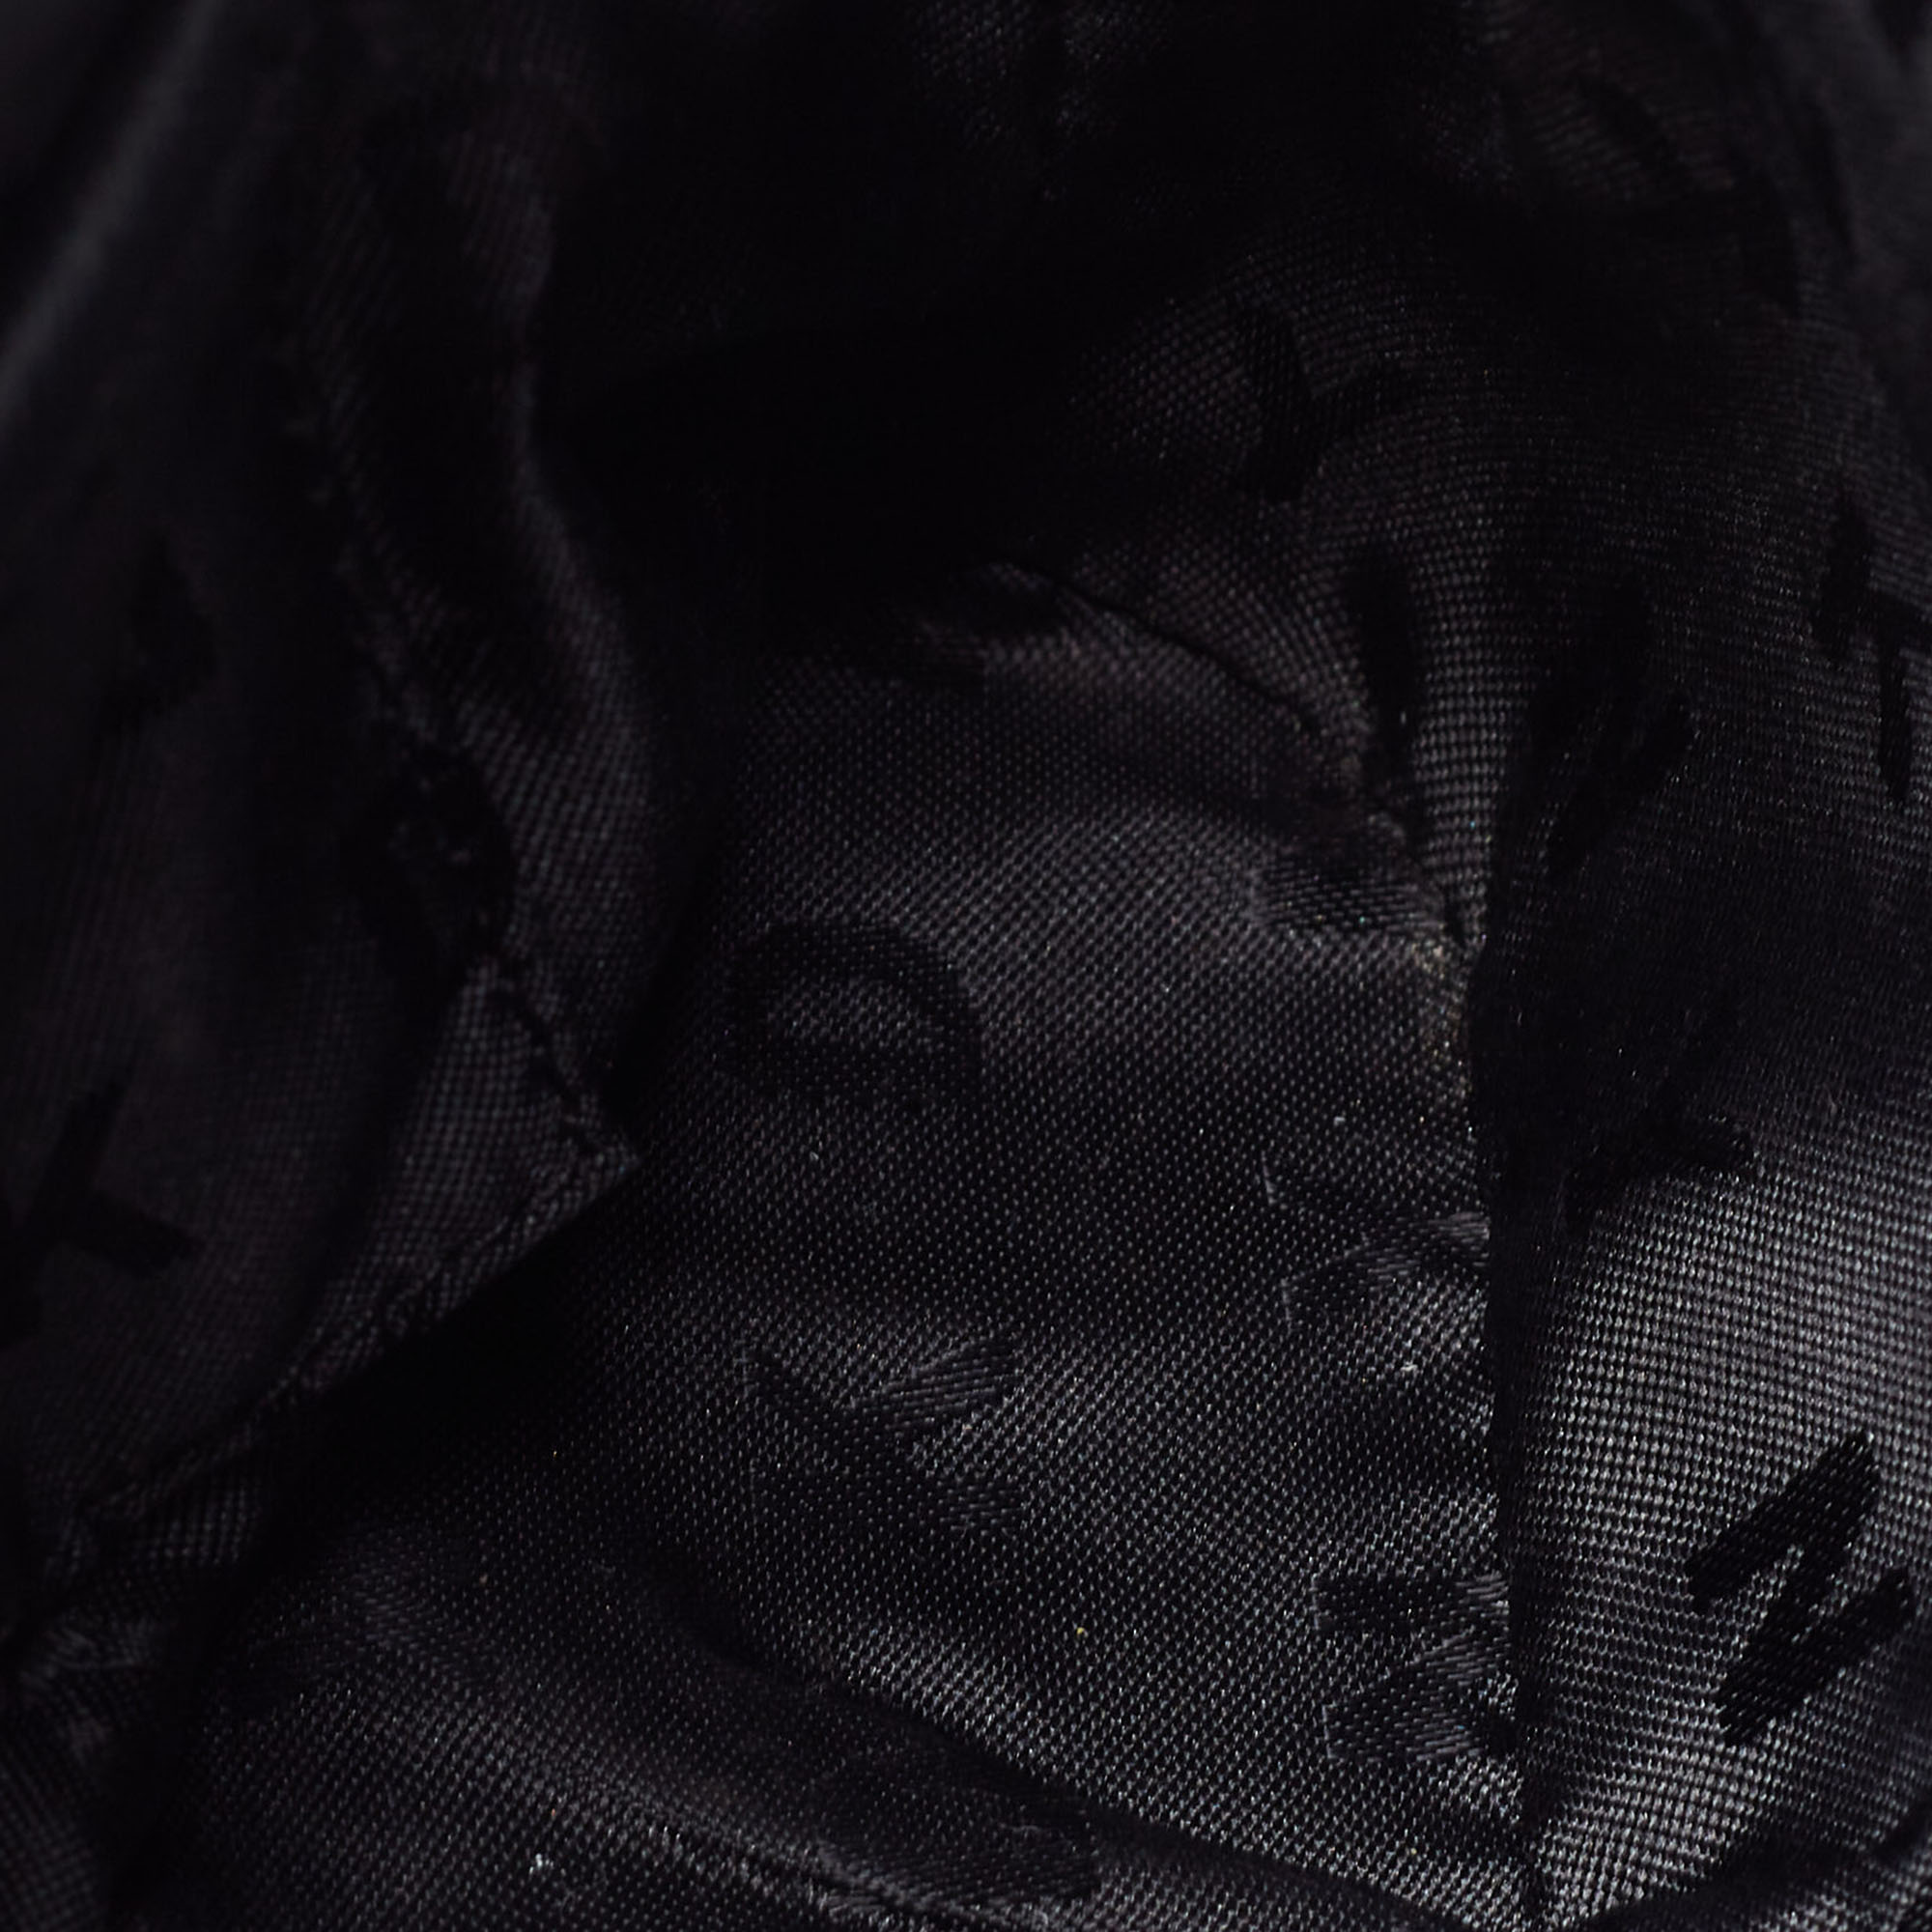 DKNY Grey Leather Bryant Dome Crossbody Bag